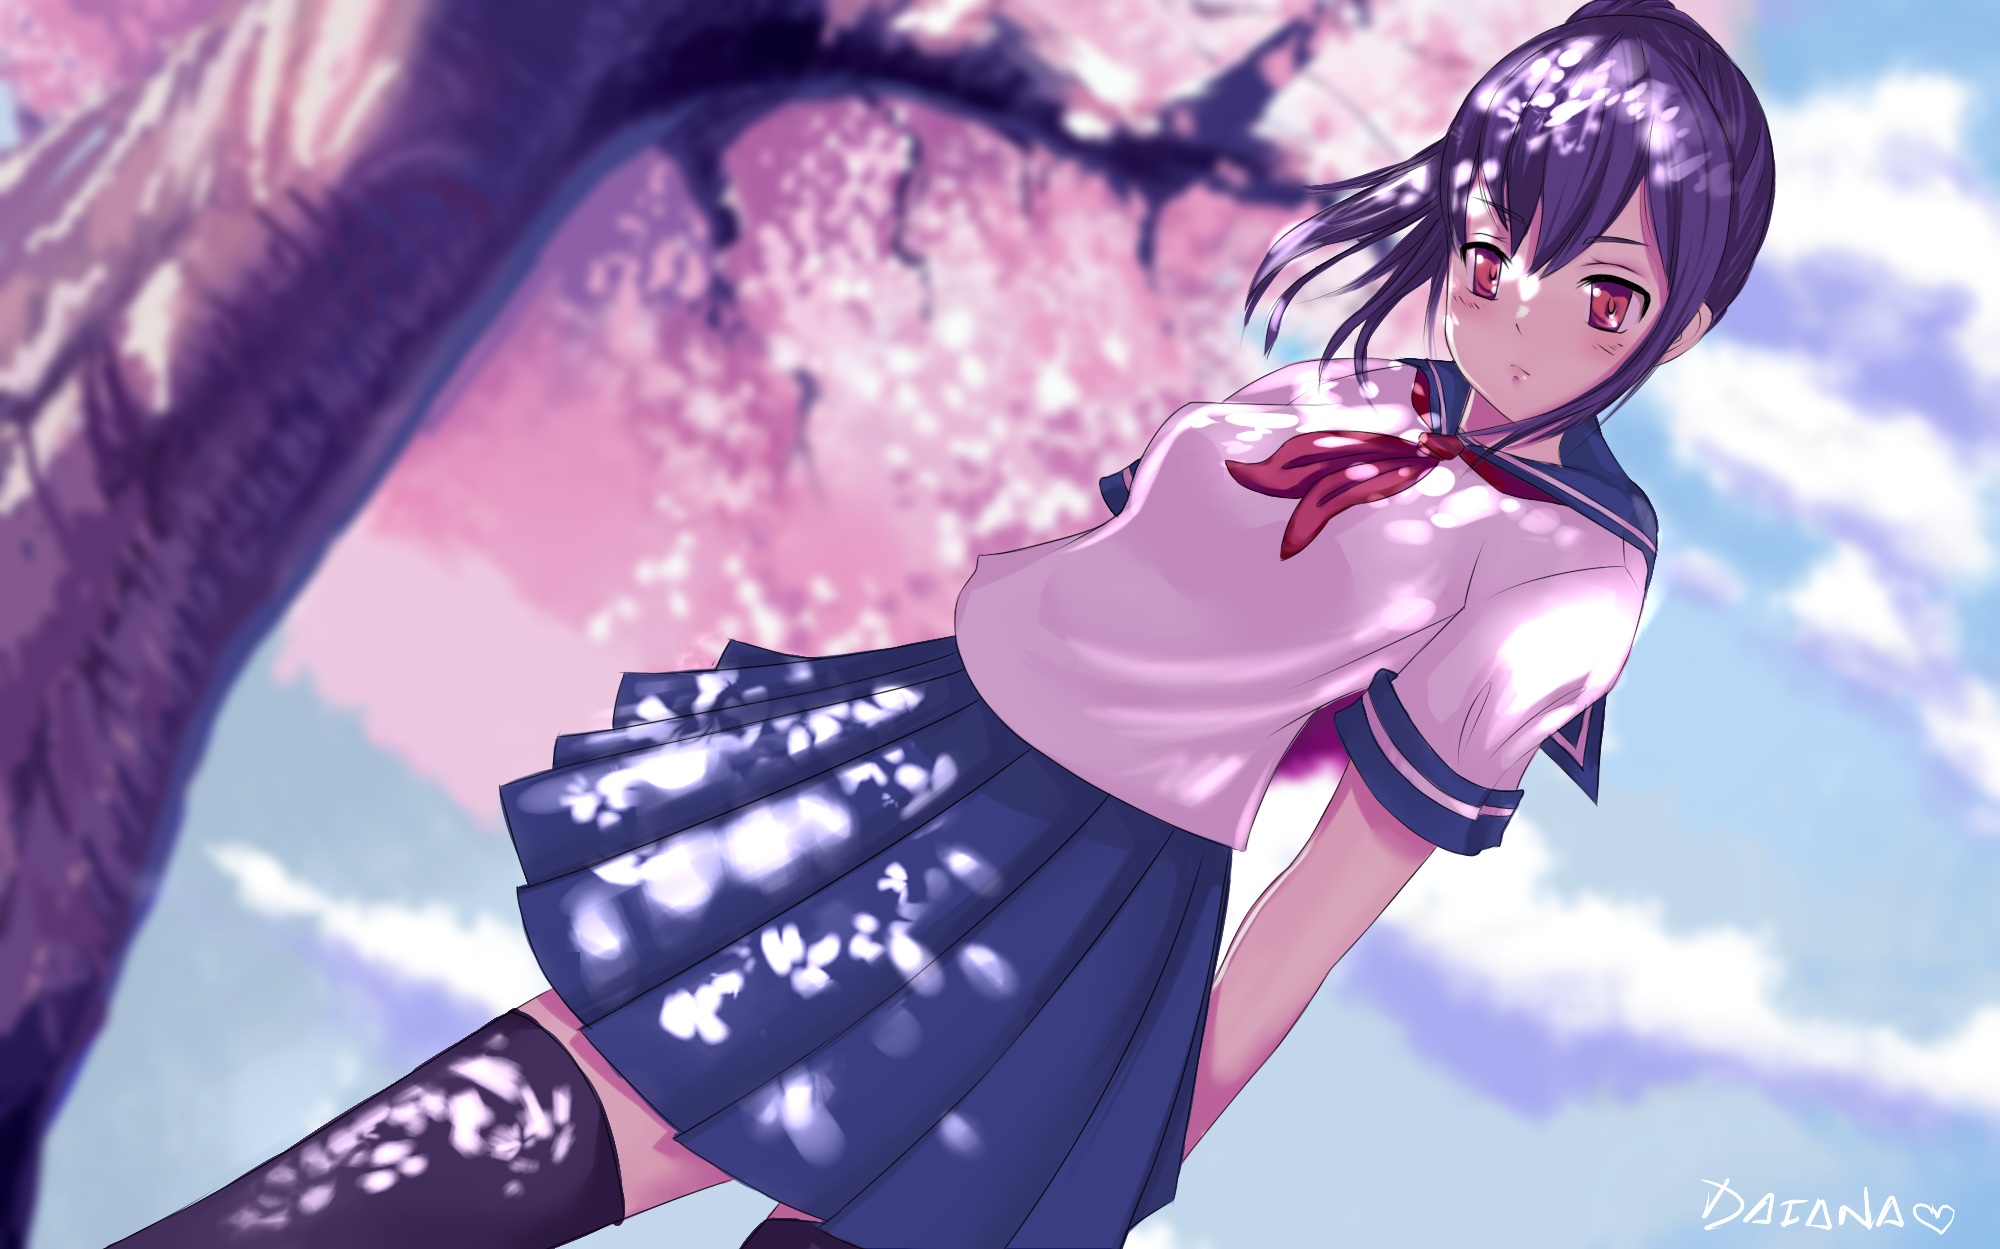 Play Yandere School on PC | #1 Anime Game Featuring Yandere-chan-demhanvico.com.vn